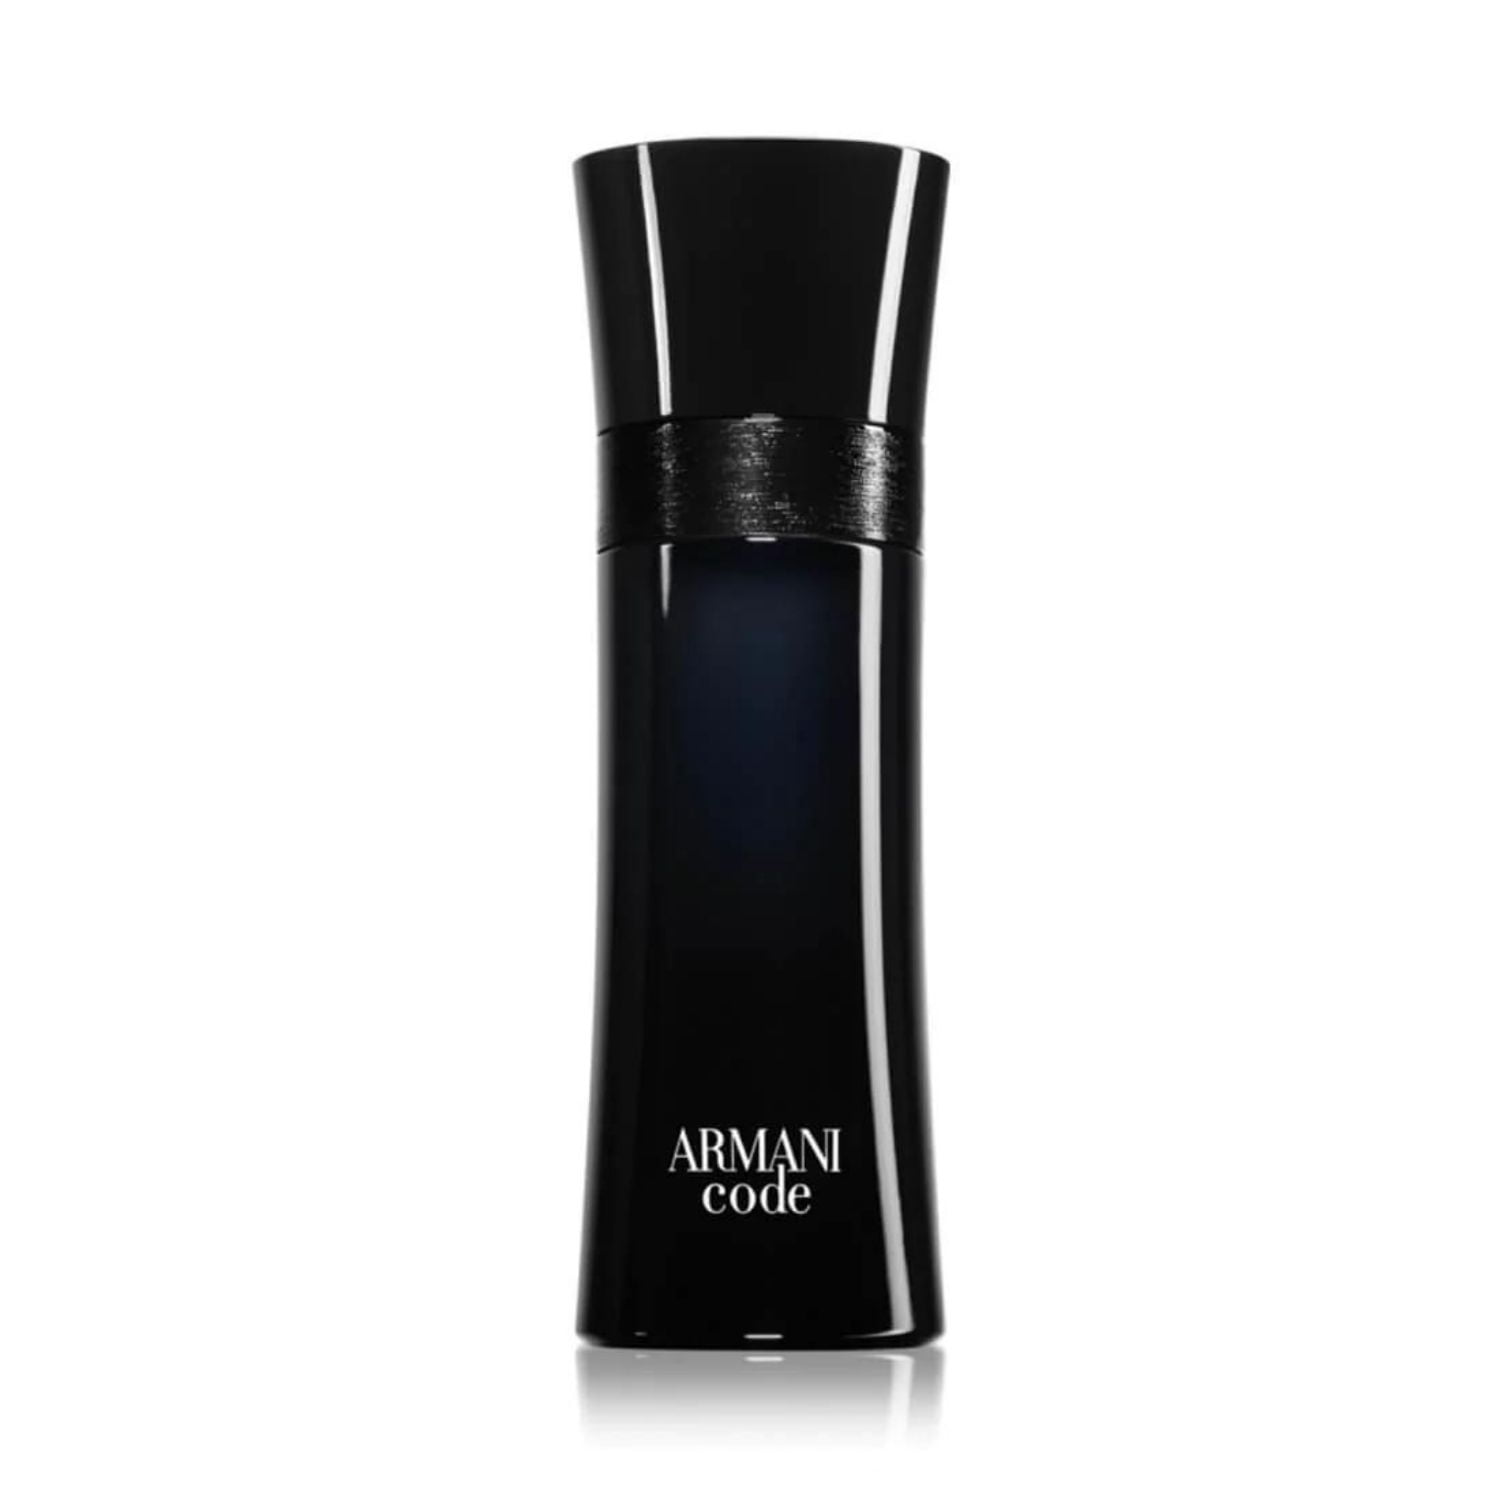 Giorgio Armani Code Eau De Toilette Pour Men, 125 ml - Walmart.com